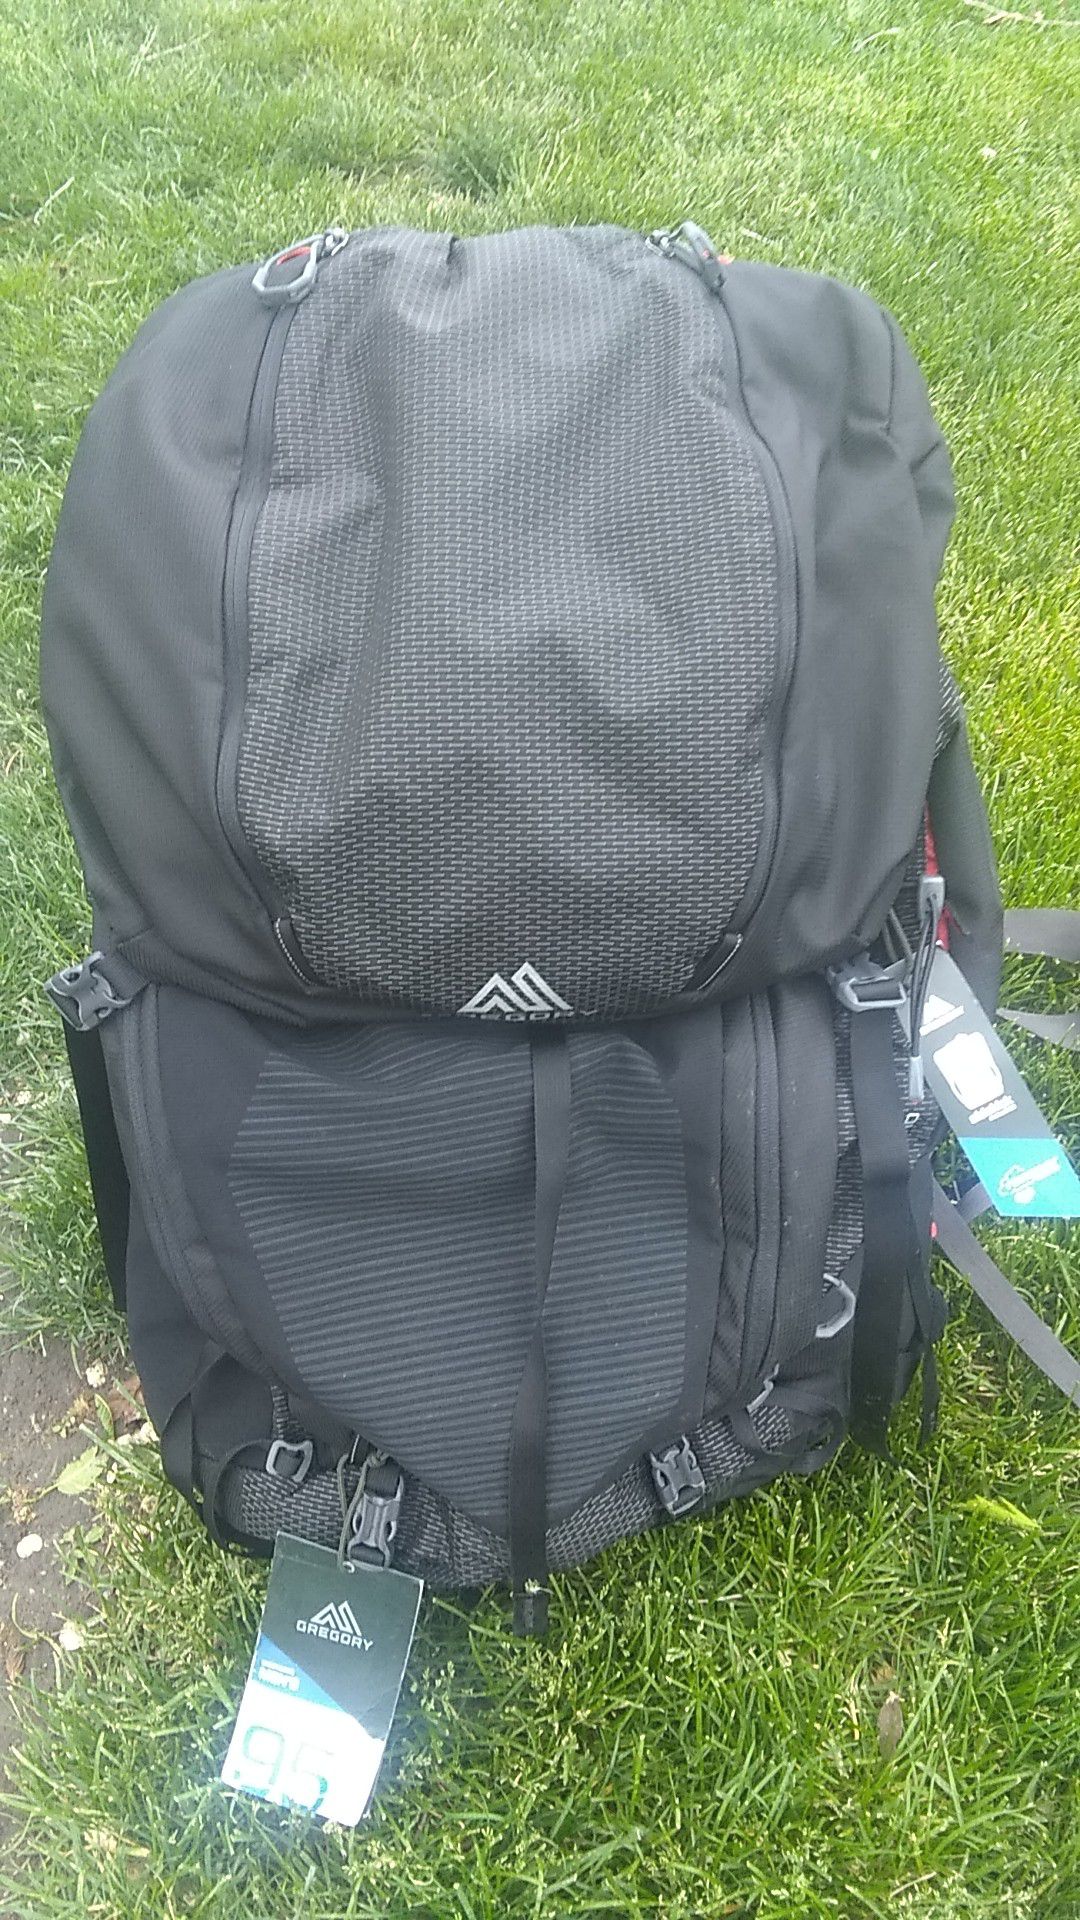 Gregory baltoro 95 hiking backpack